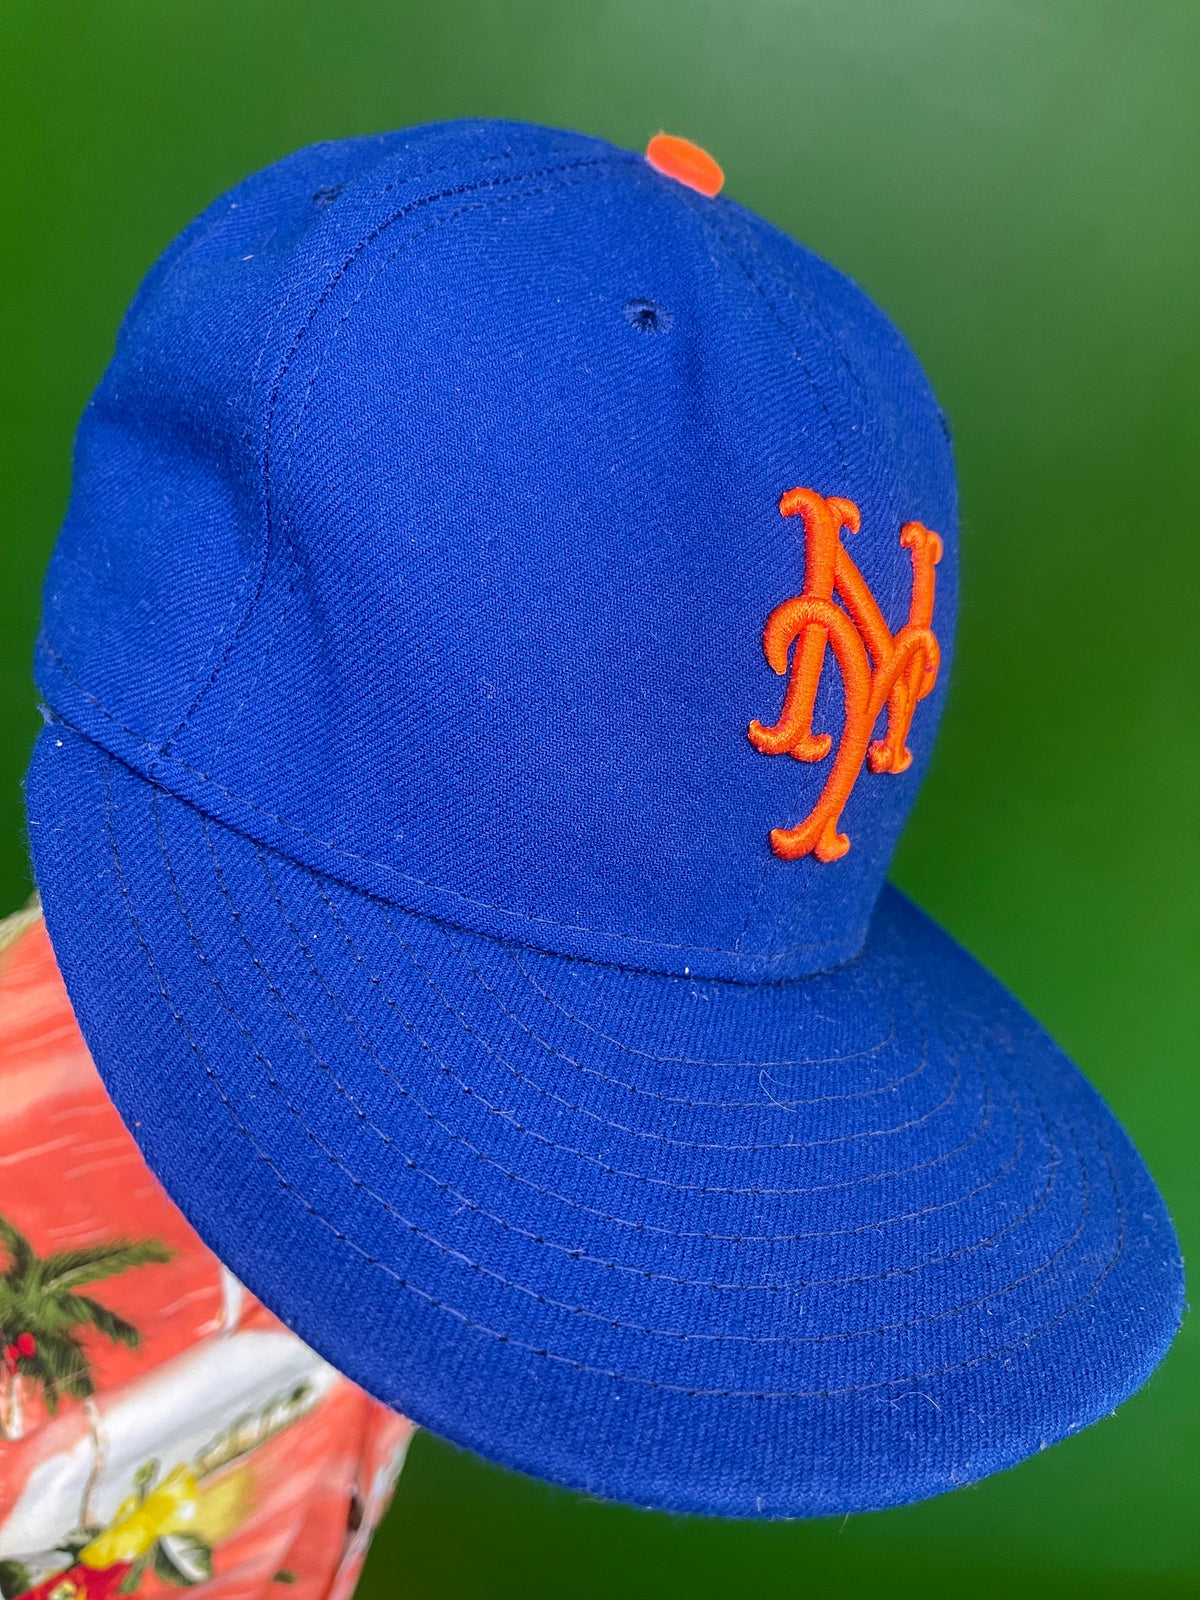 MLB New York Mets New Era 59FIFTY Baseball Hat / Cap Size 7